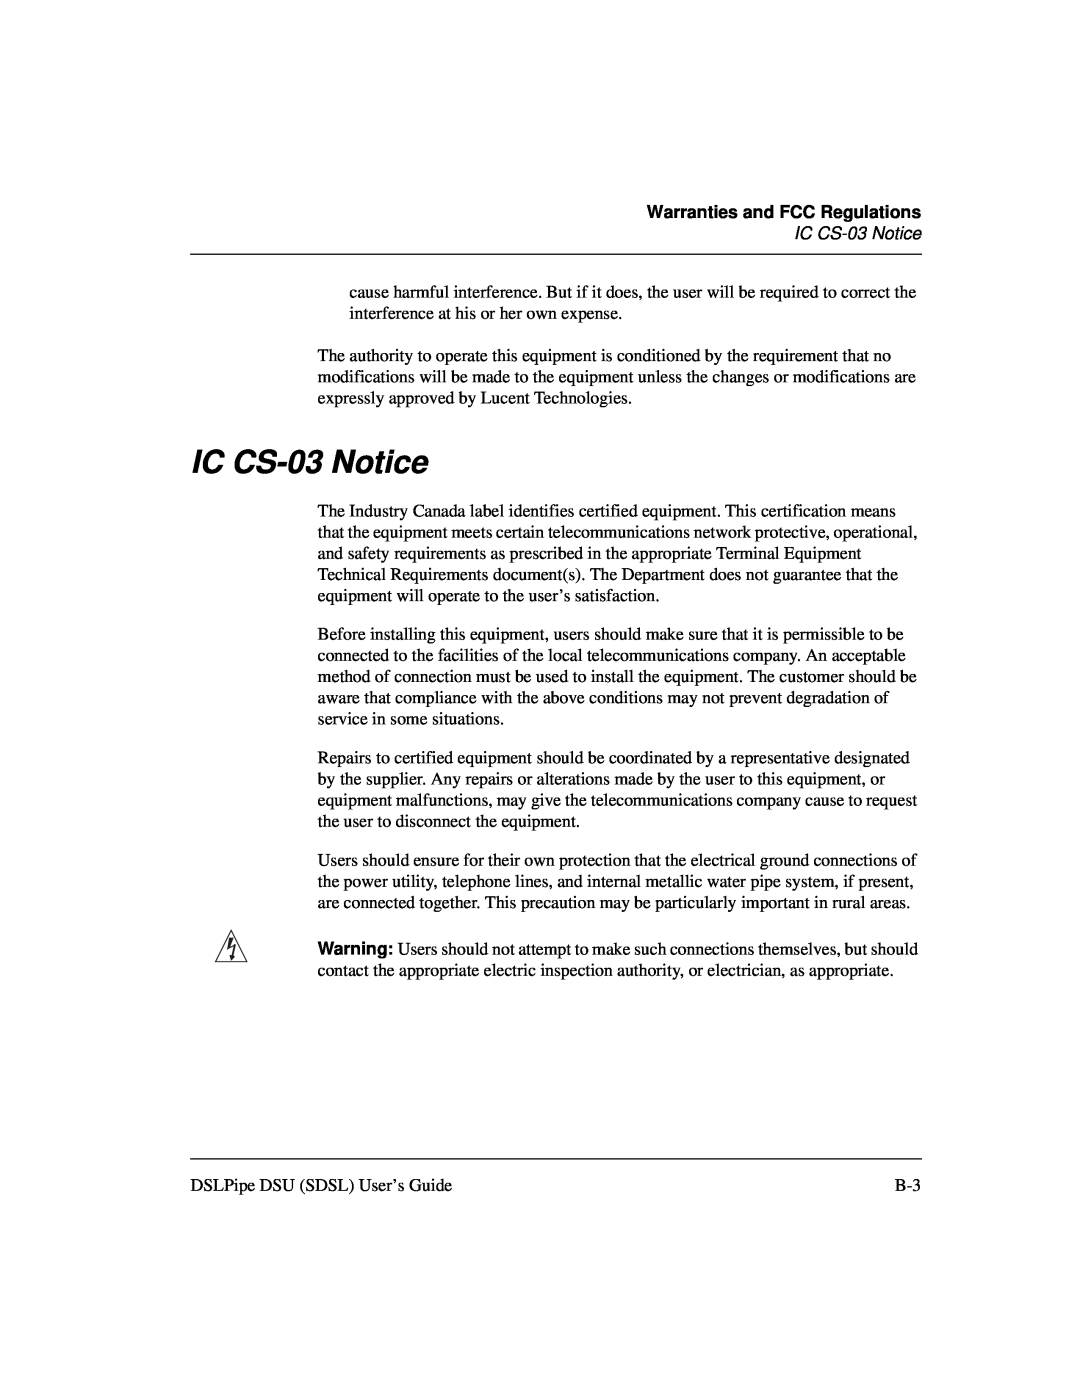 Lucent Technologies 7820-0657-001 manual IC CS-03 Notice, Warranties and FCC Regulations 